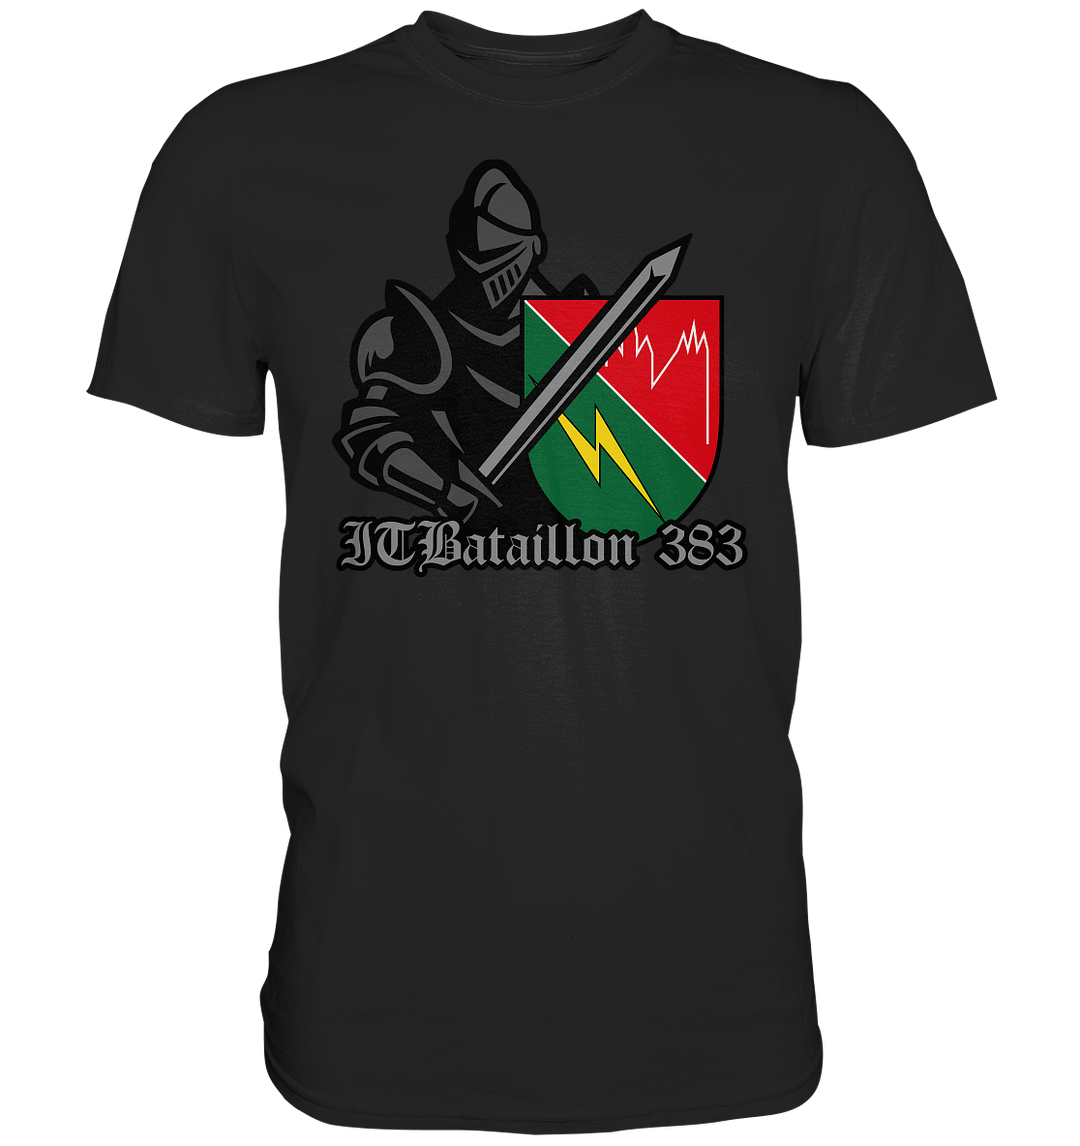 "IT Bataillon 383 - Ritter" - Premium Shirt